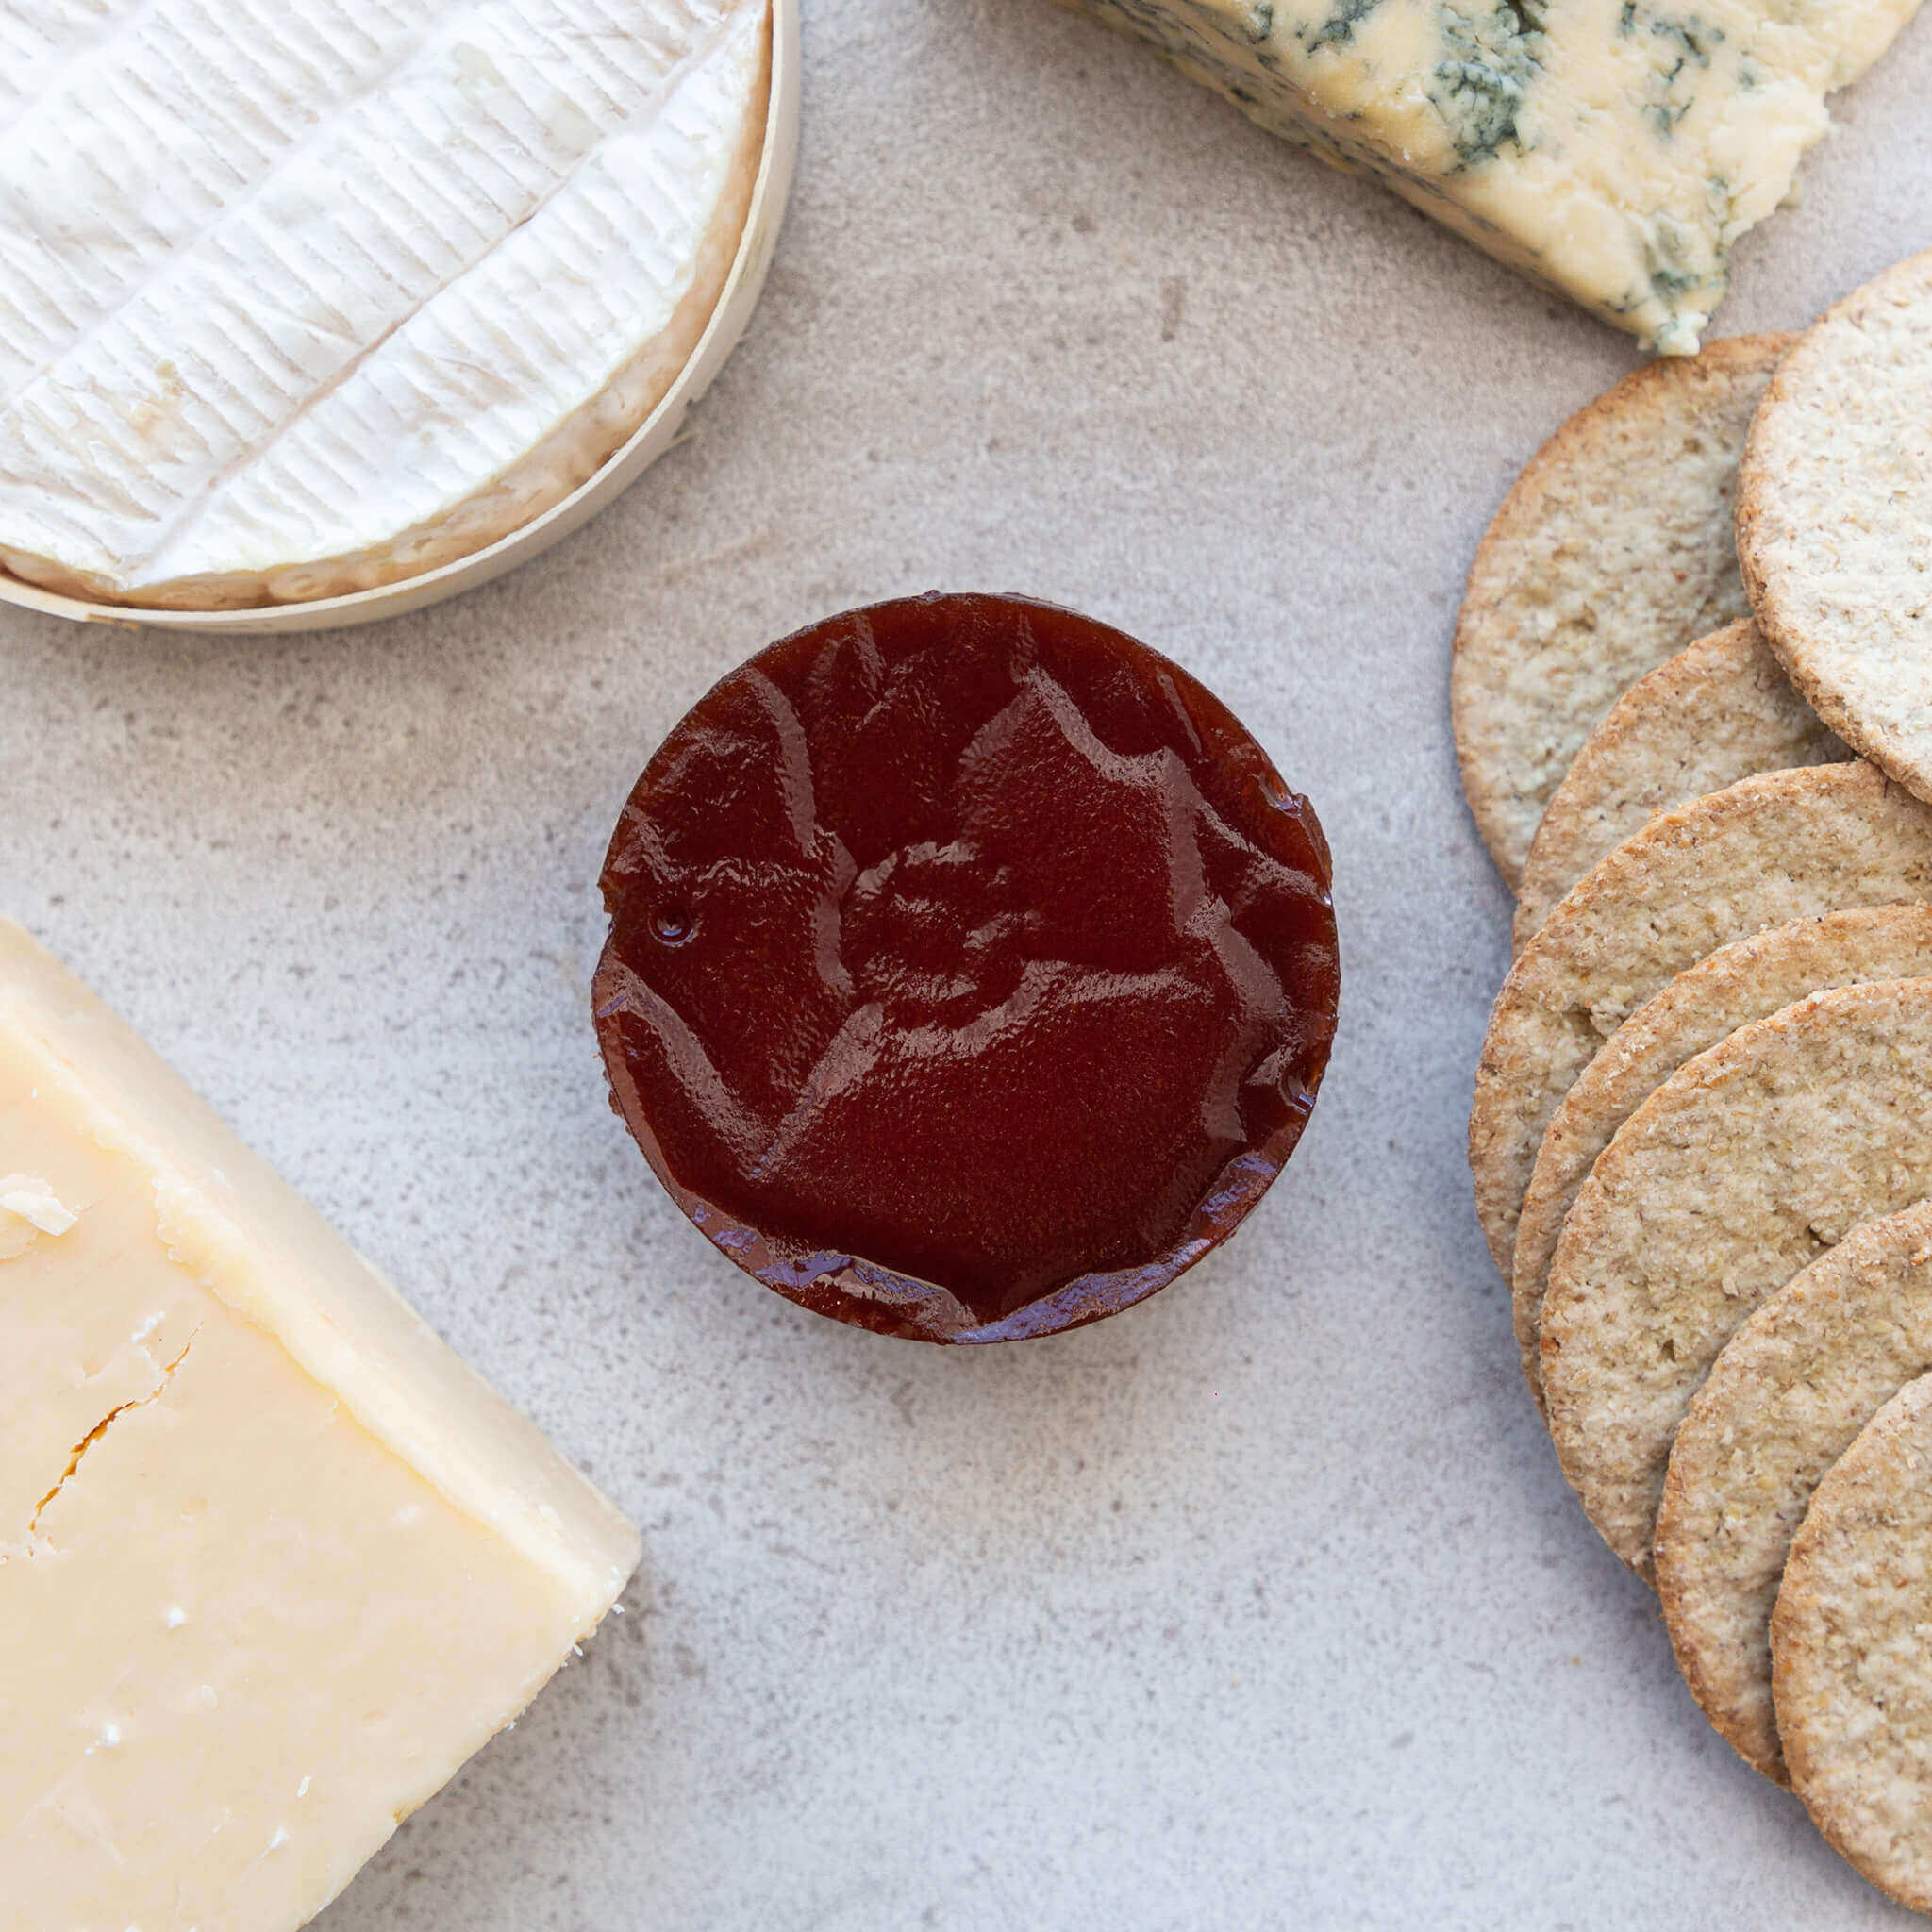 The deli cheese platter